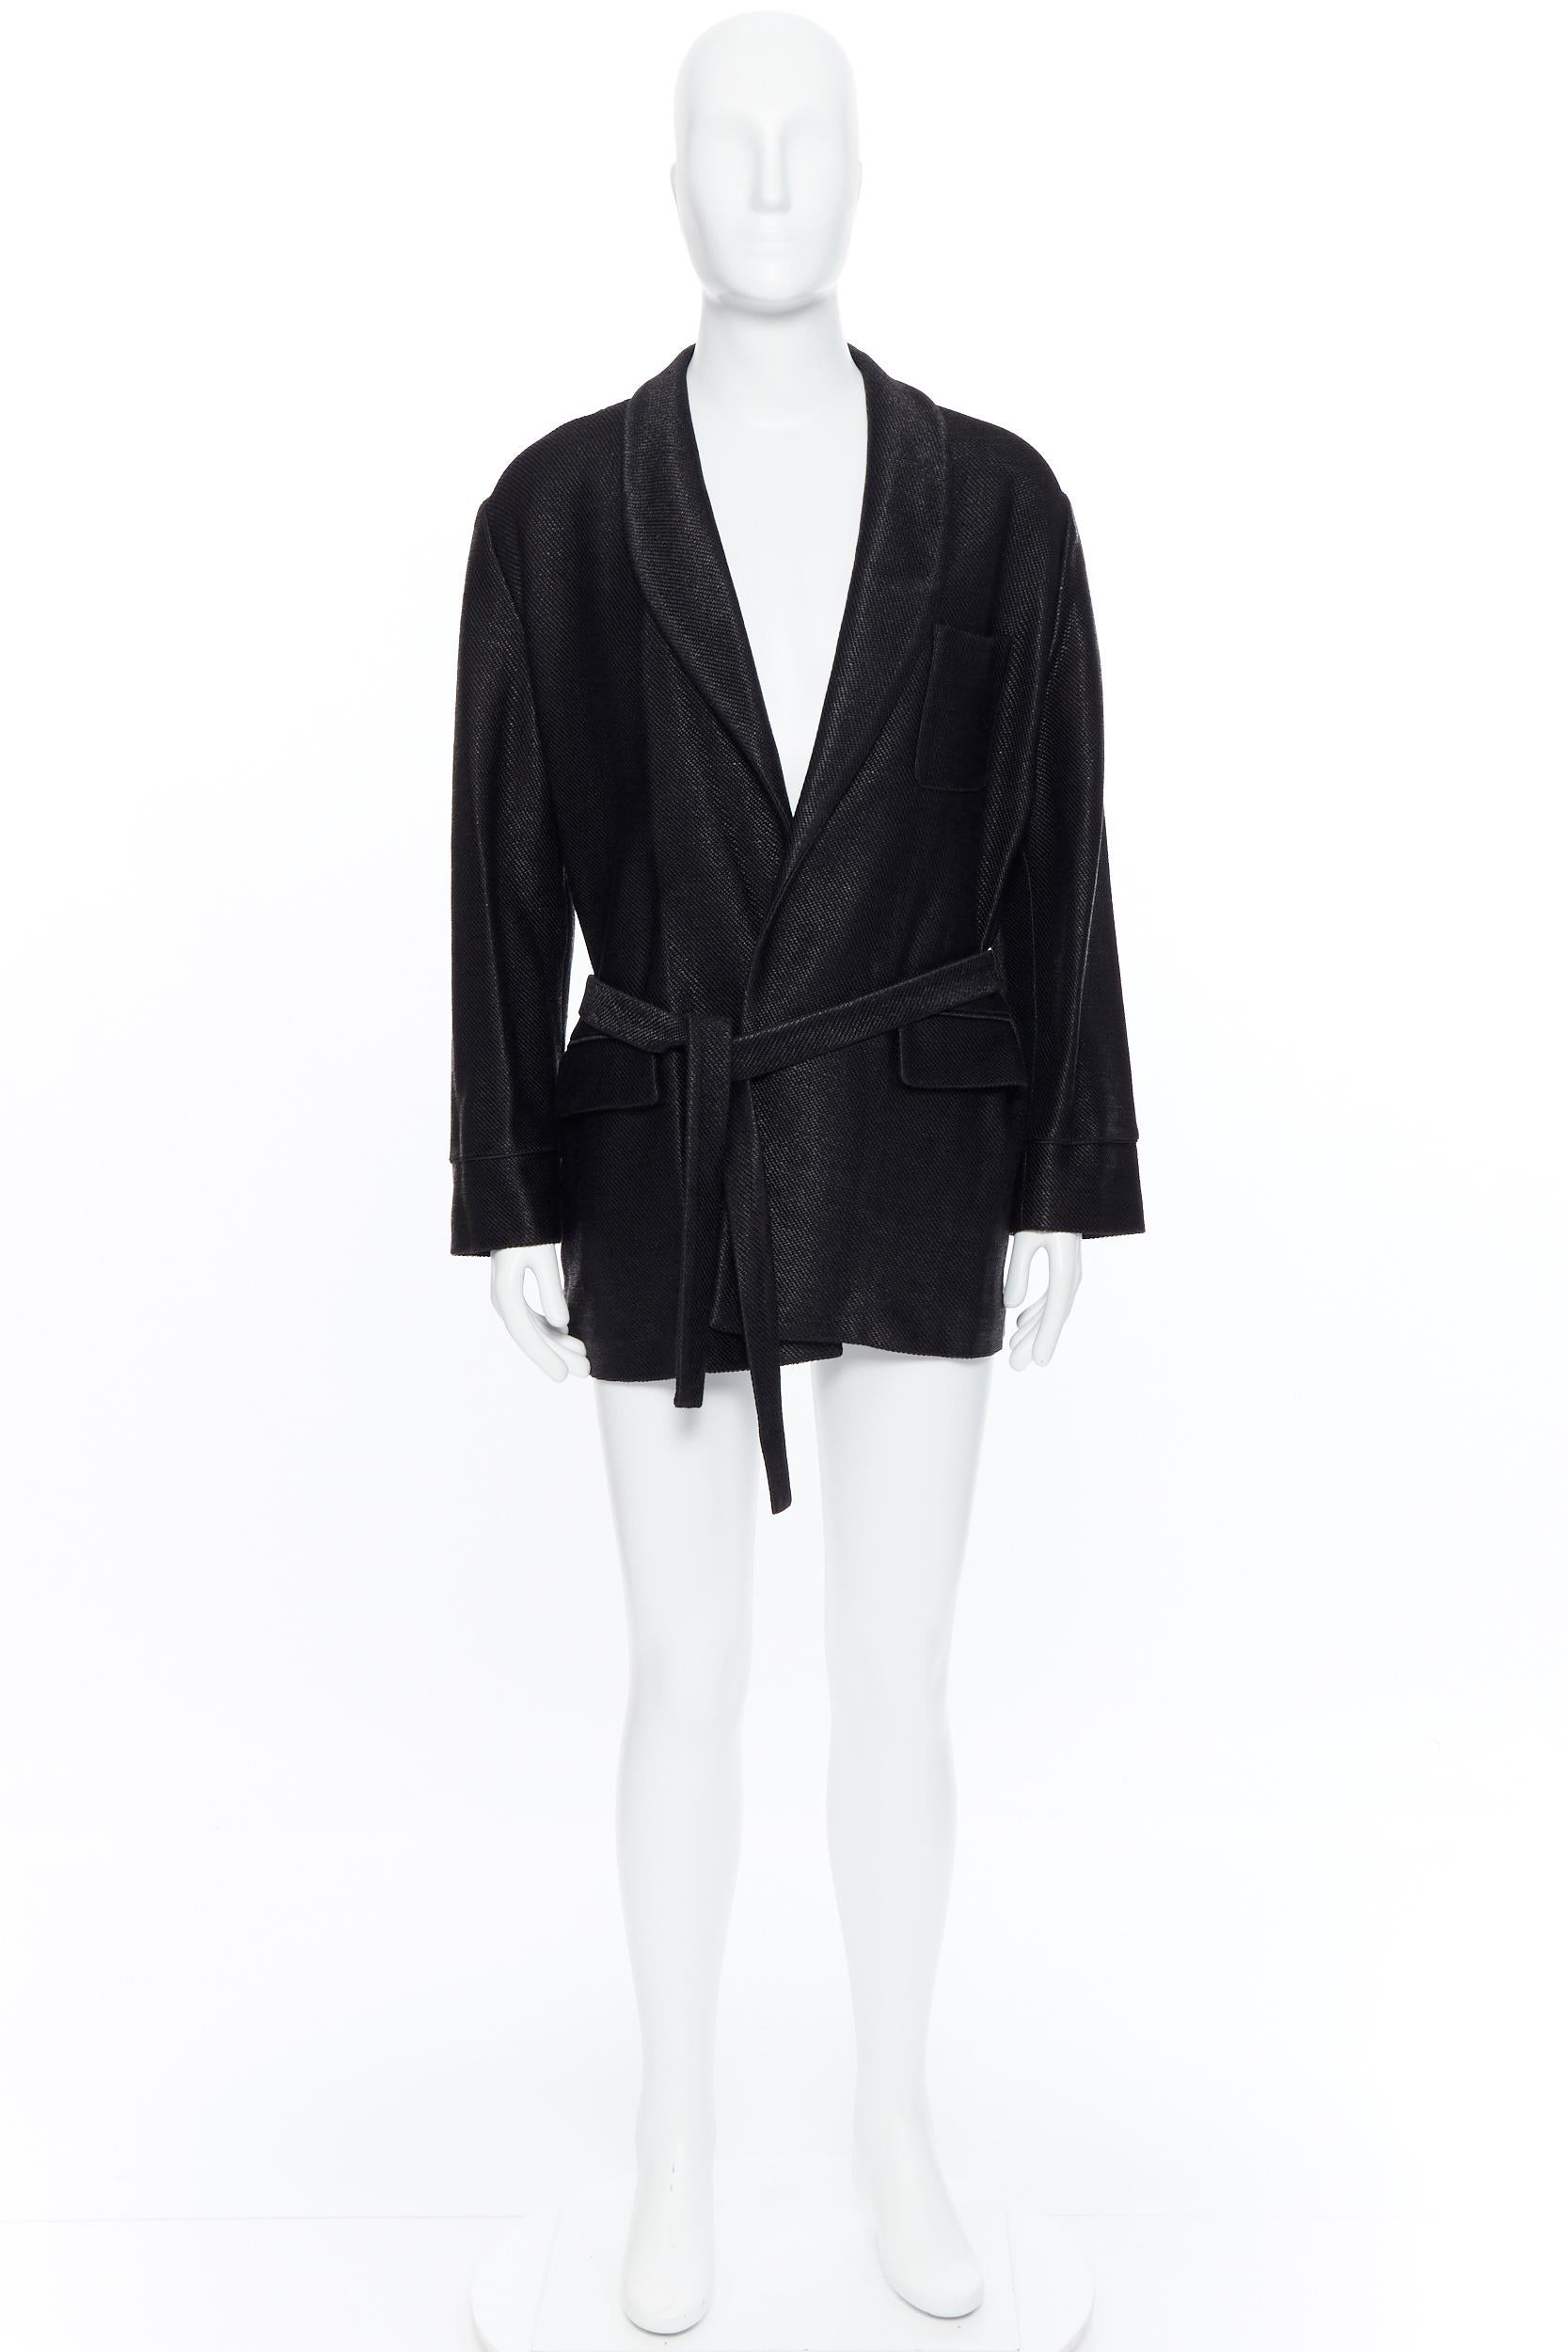 Black new LA PERLA MENSWEAR Runway black lacquered raffia weave belted robe coat L